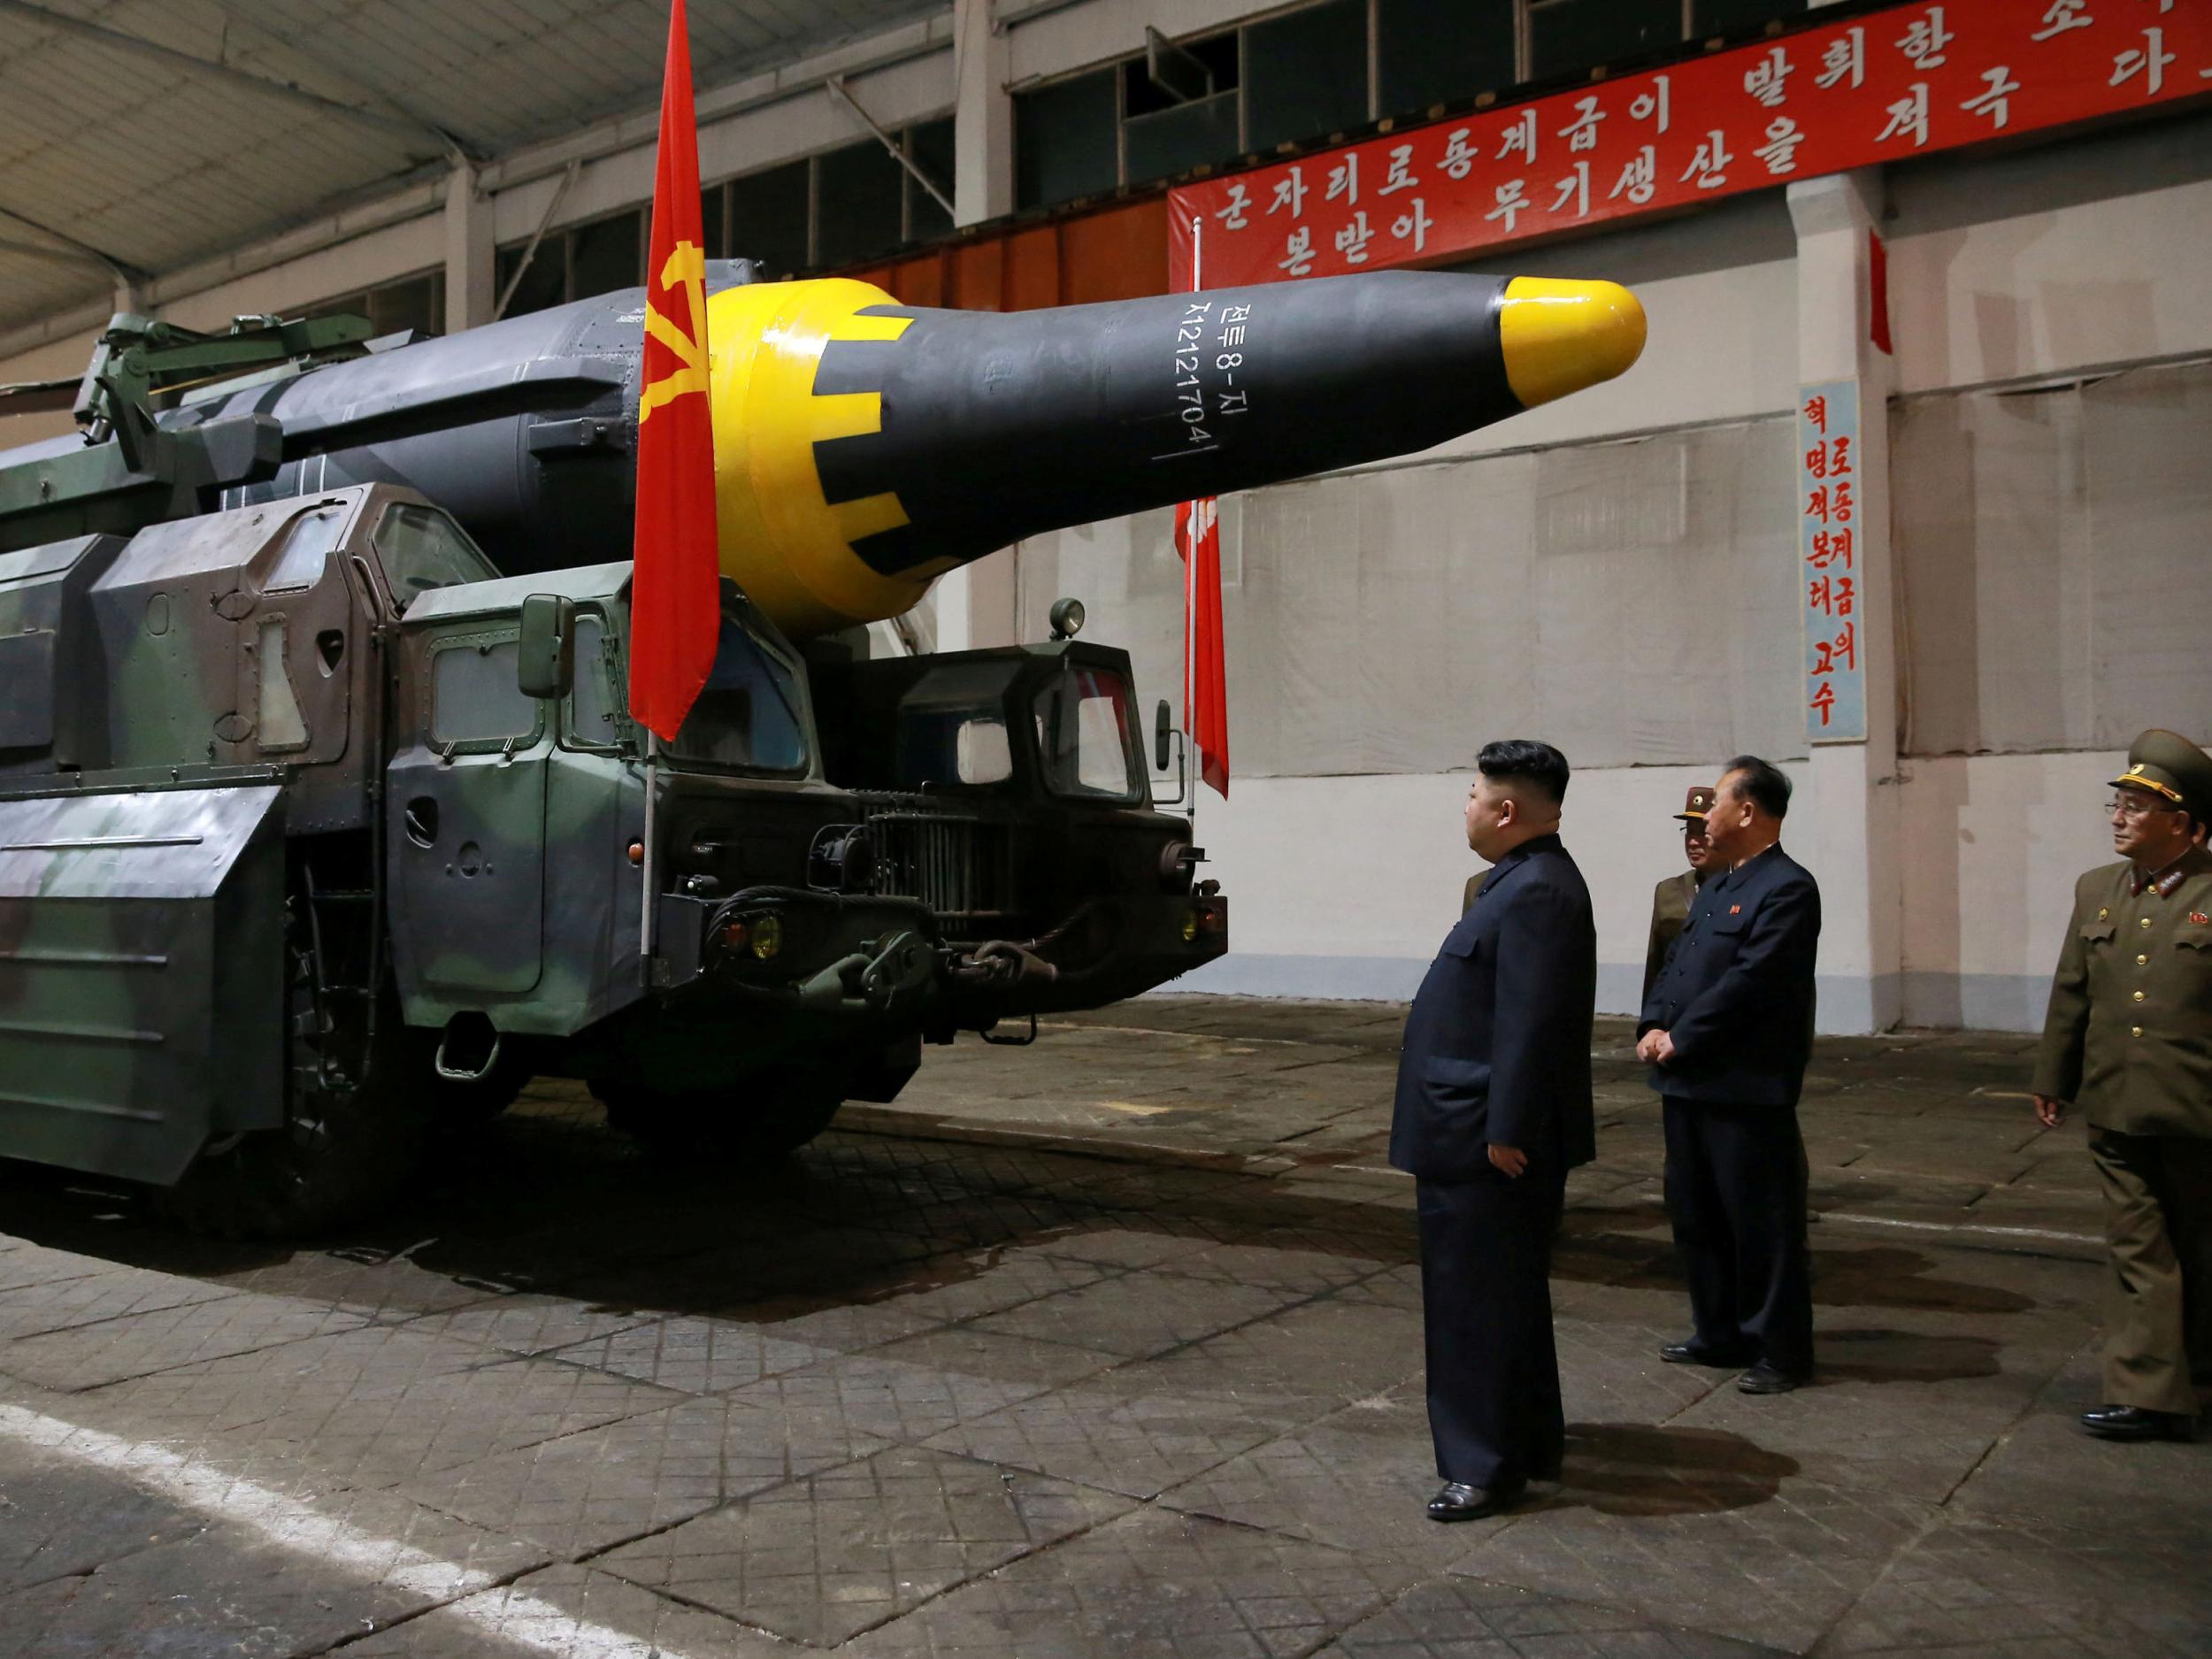 North Korean leader Kim Jong-un inspects the long-range strategic ballistic rocket Hwasong-12